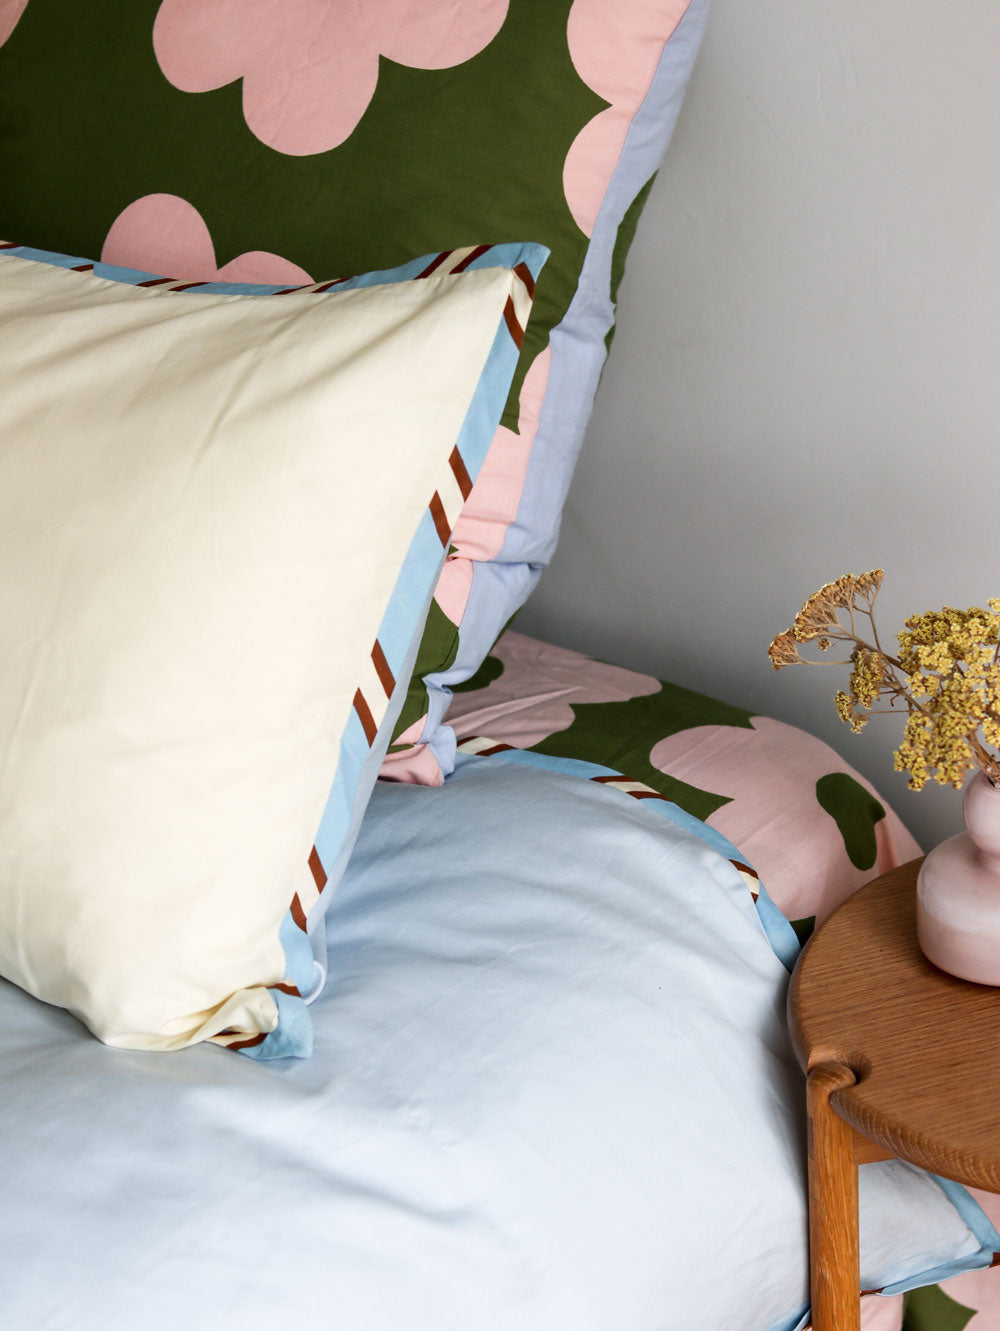 Everyday Standard Pillowcase Set - Vanilla Sky  by Mosey Me